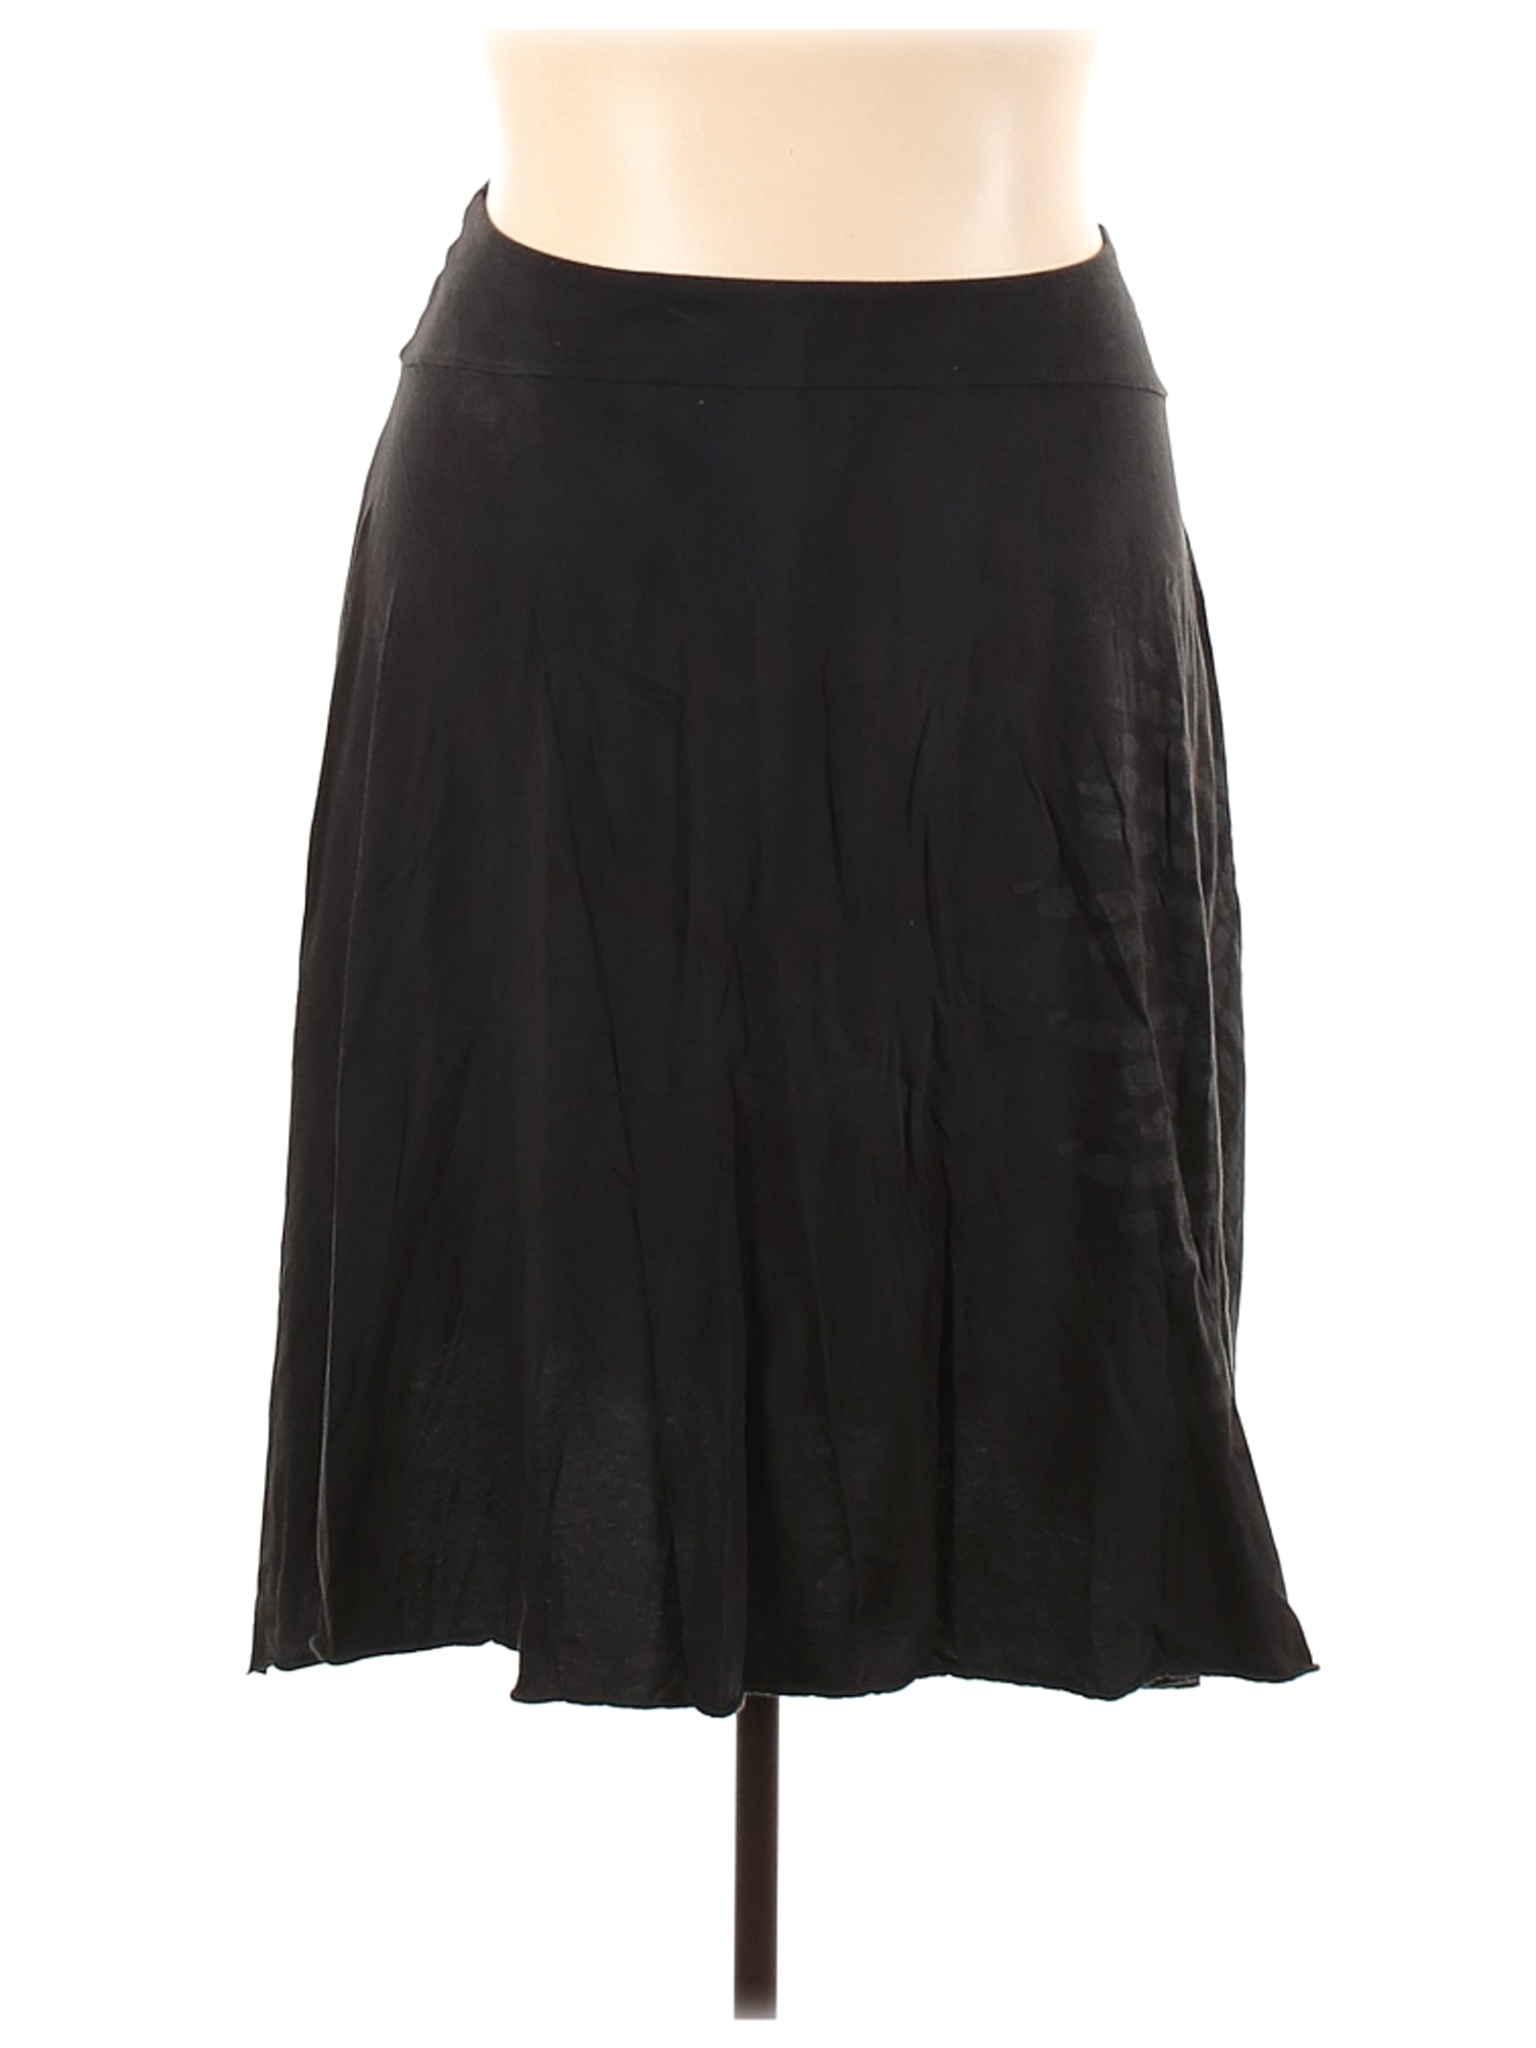 PrAna Women Black Casual Skirt L | eBay